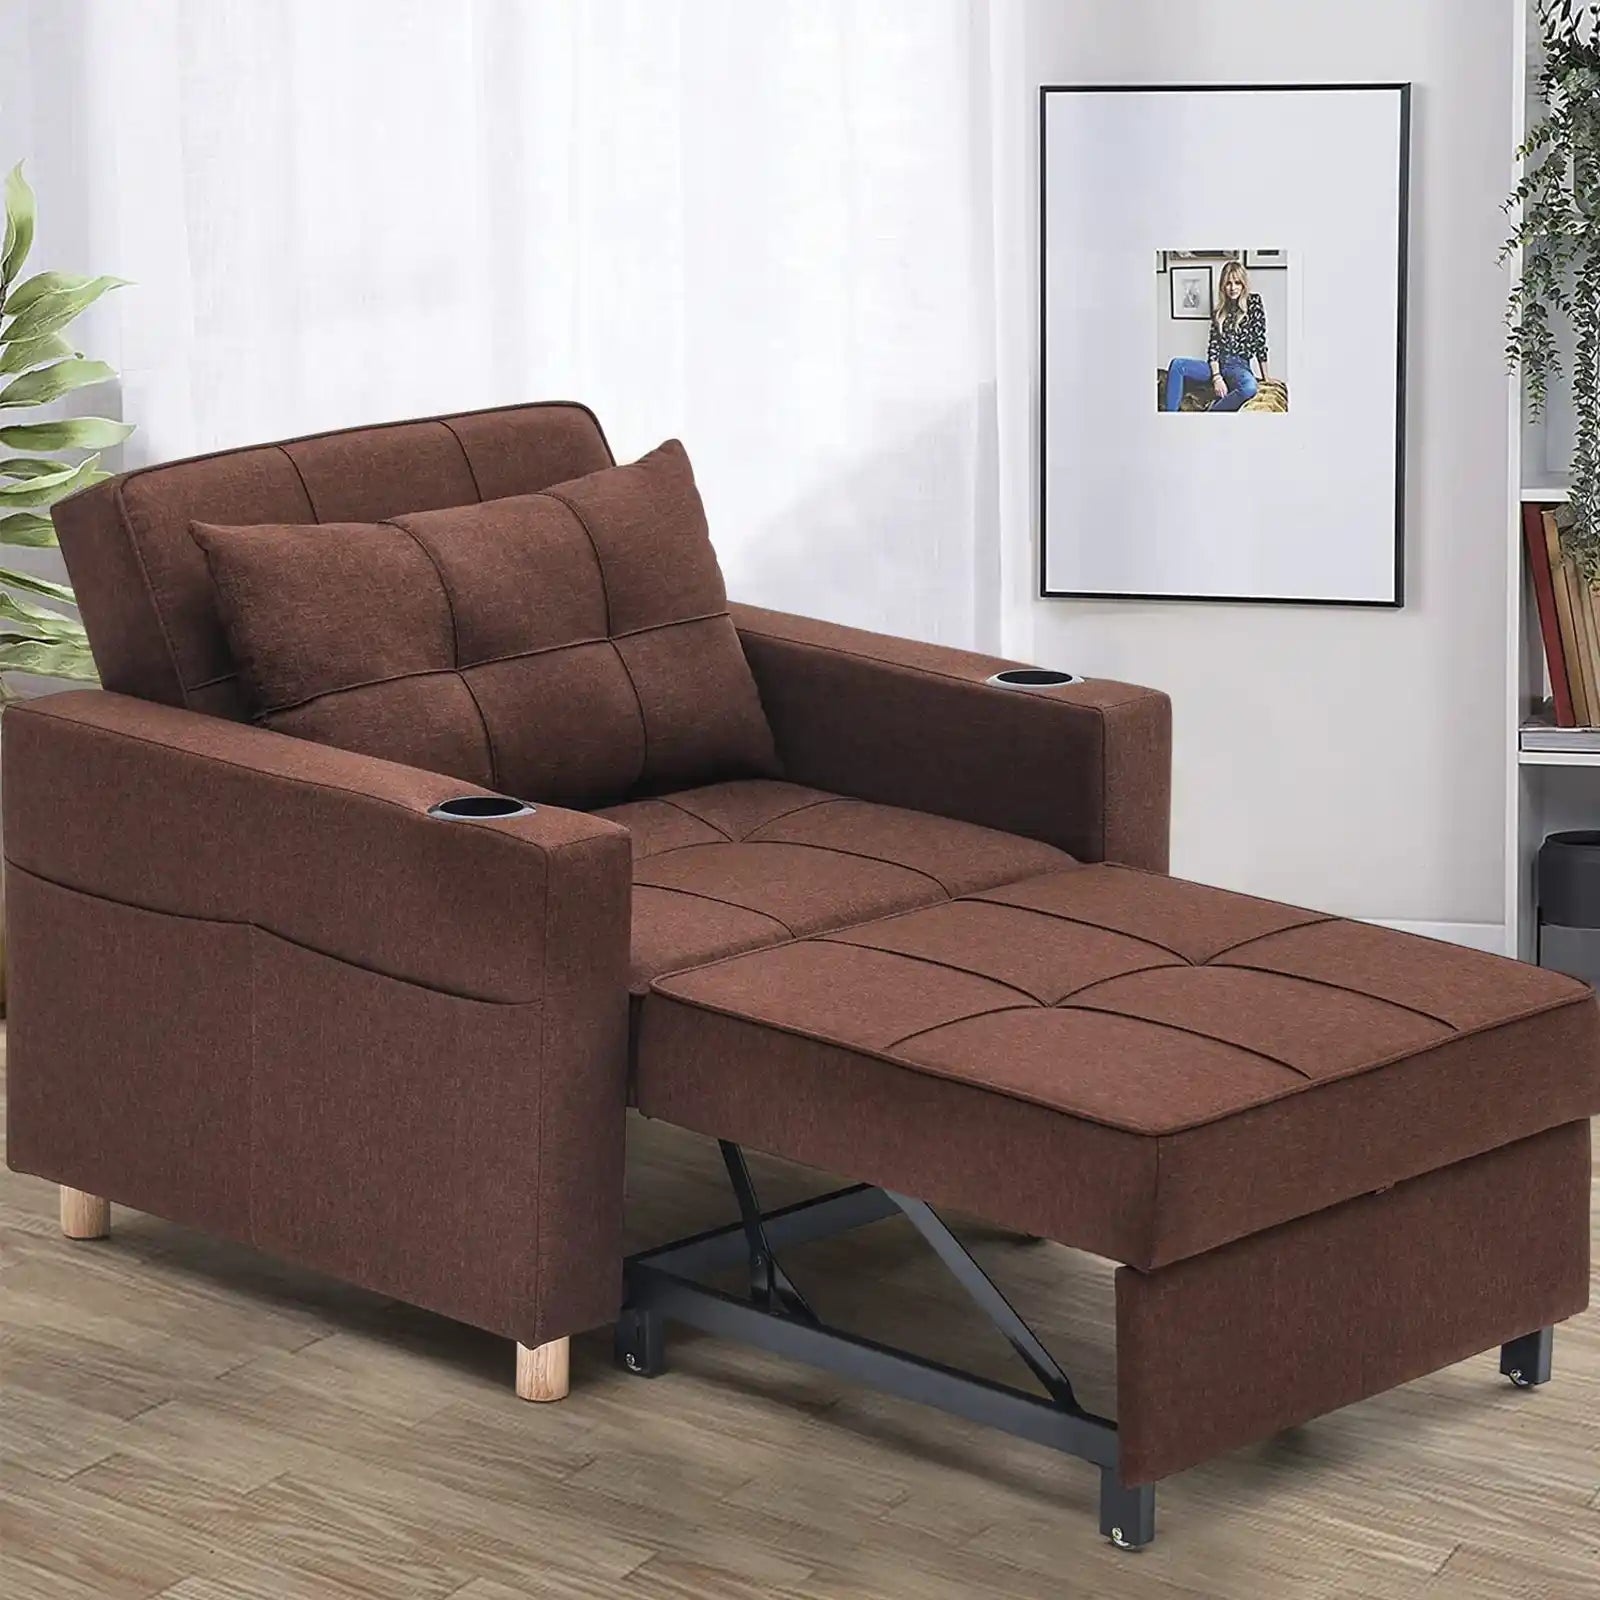  Esright Silla cama convertible 3 en 1, cama de sillón,  reclinable, ajustable, multifuncional, sofá cama, silla de cama individual  con tela de lino moderna : Hogar y Cocina